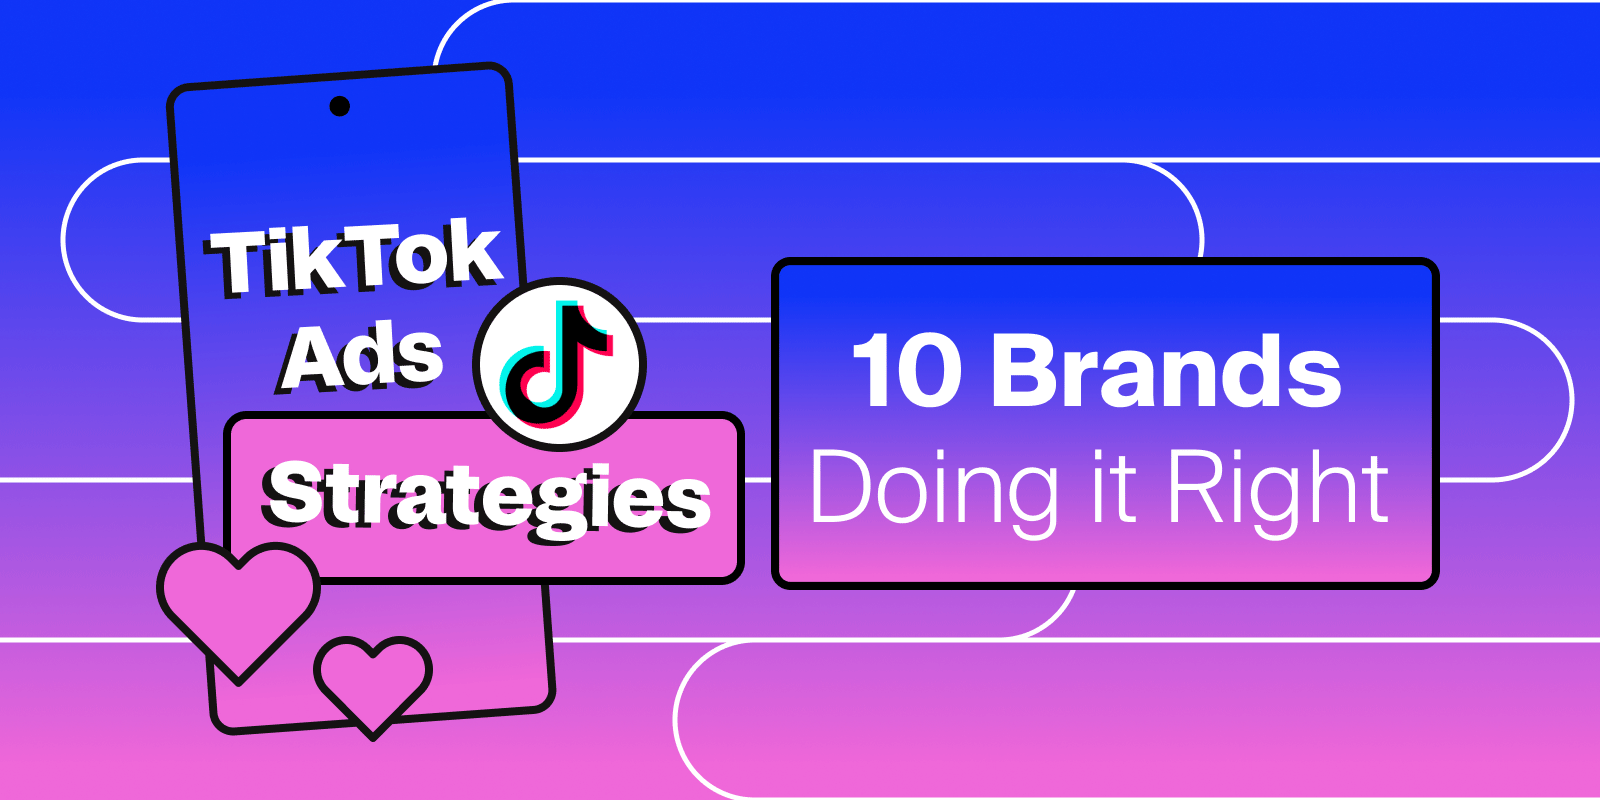 TiKTok Ads Strategies 10 Brands Doing It Right